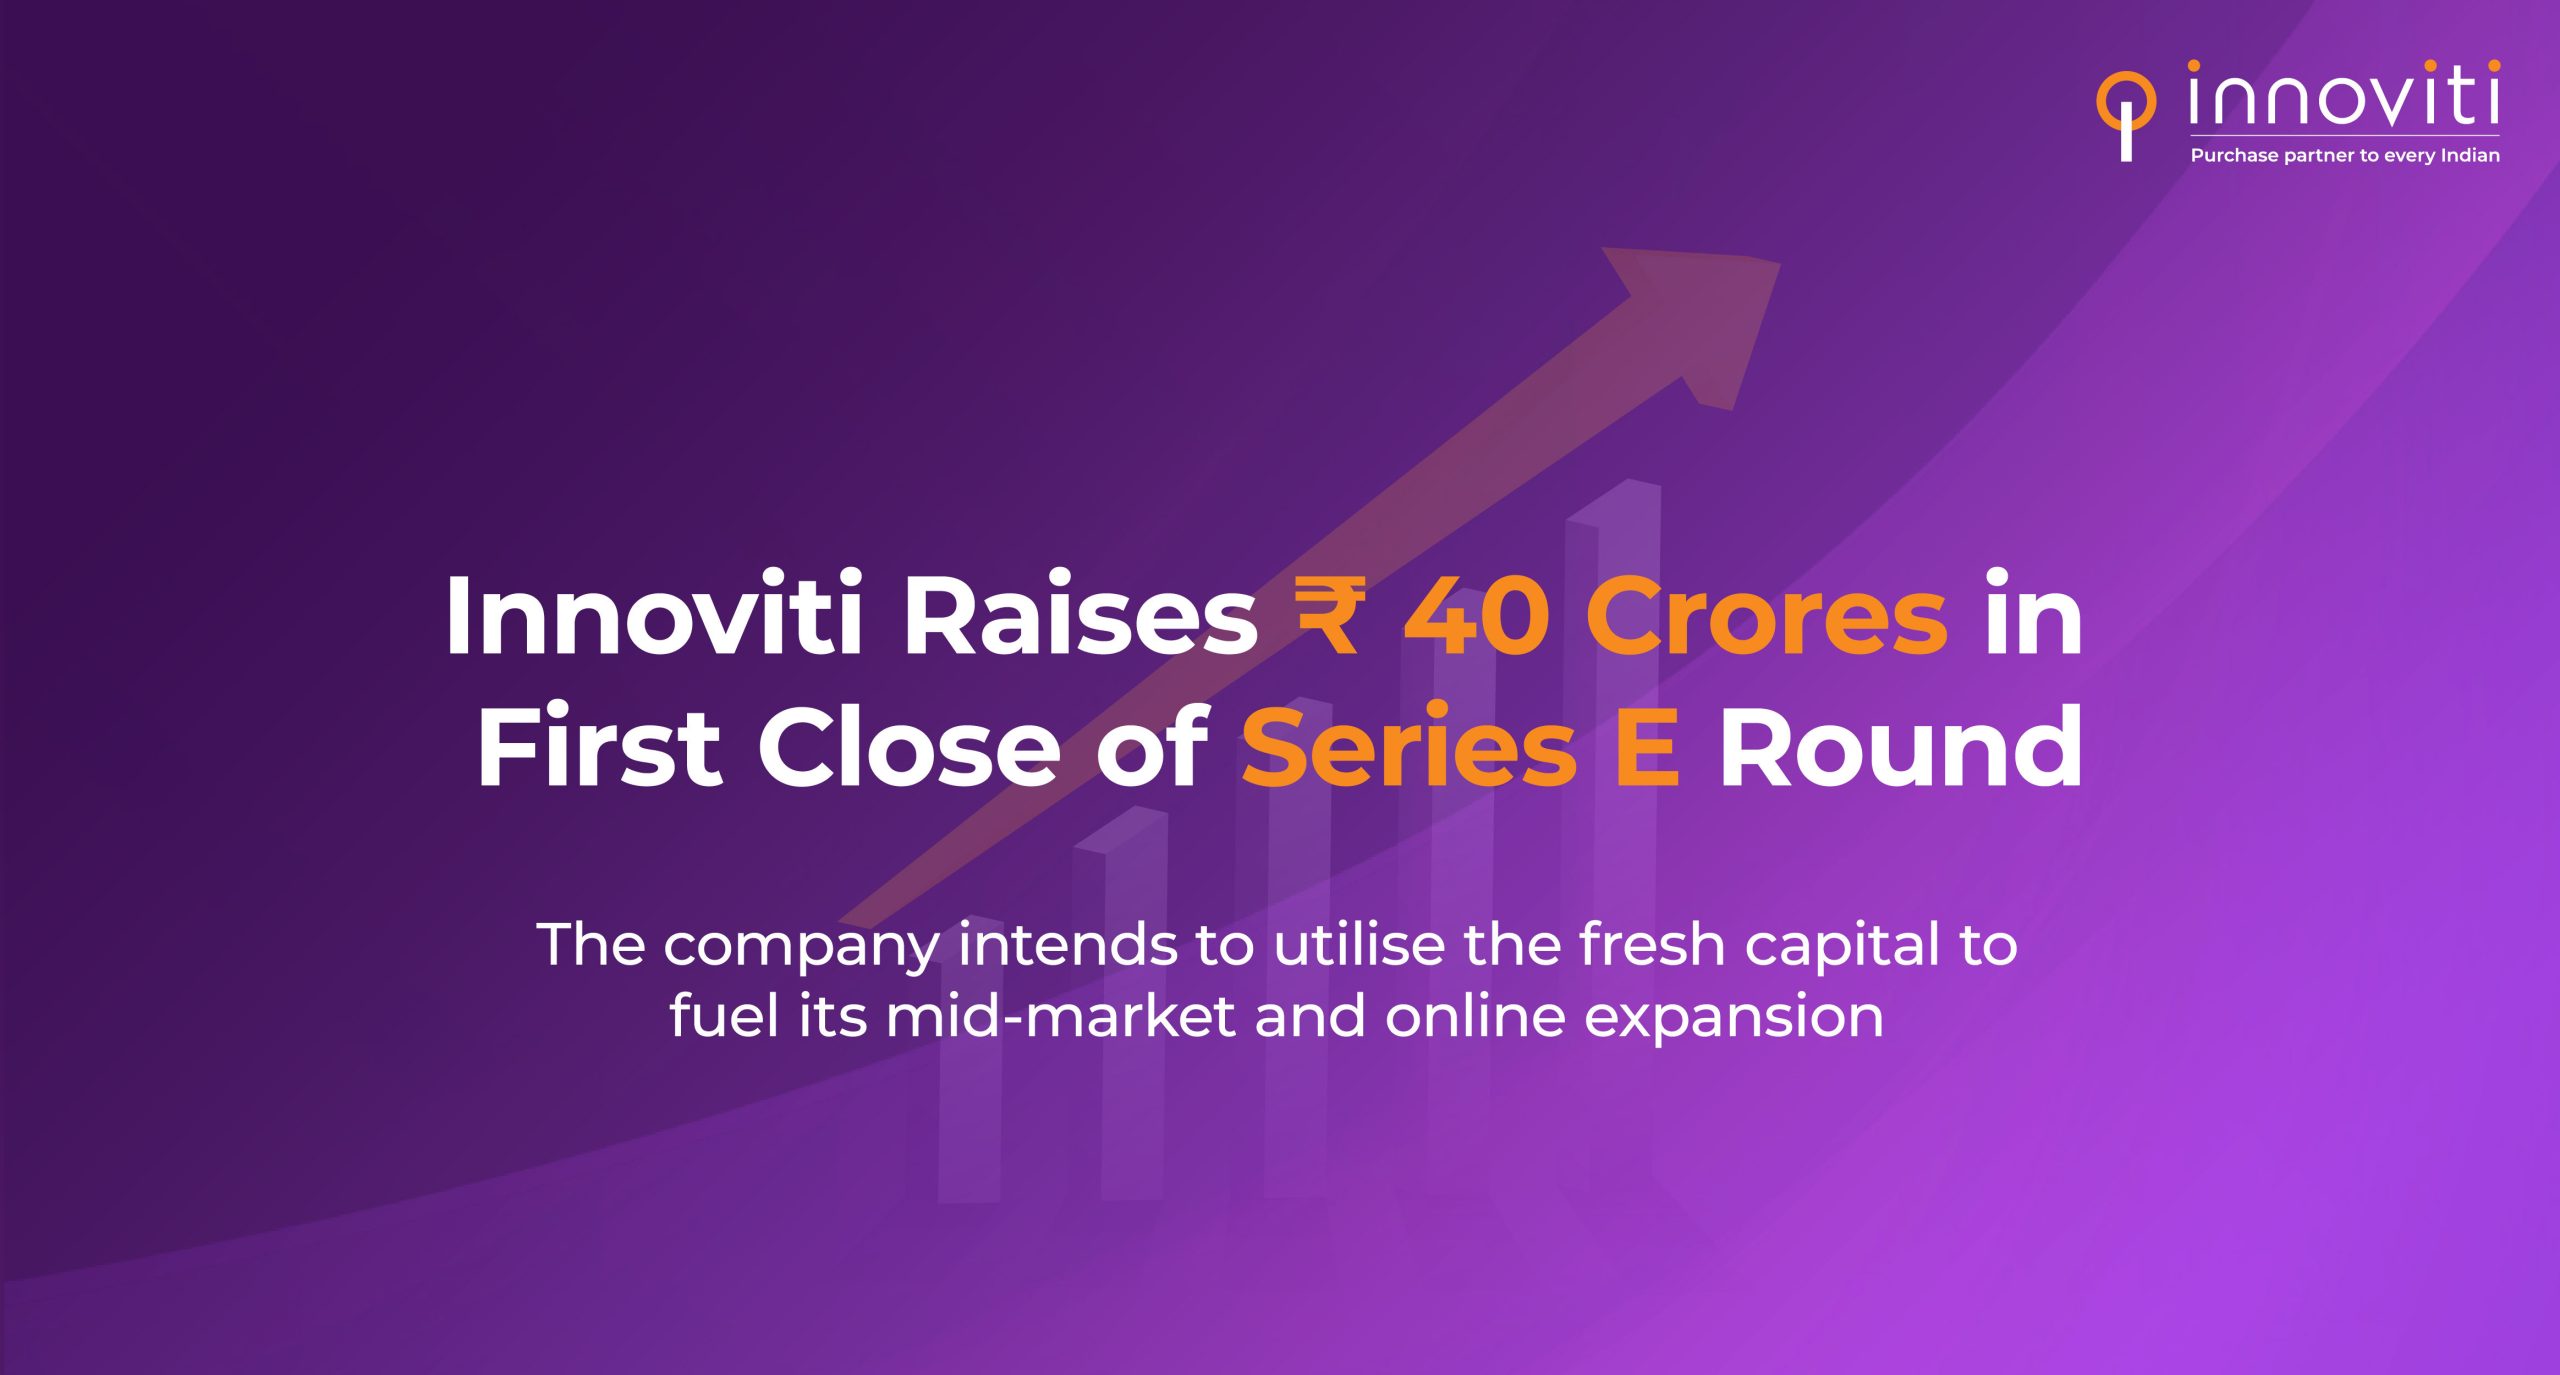 Innoviti Raises Rs. 40 Crores in First Close of Series E Round